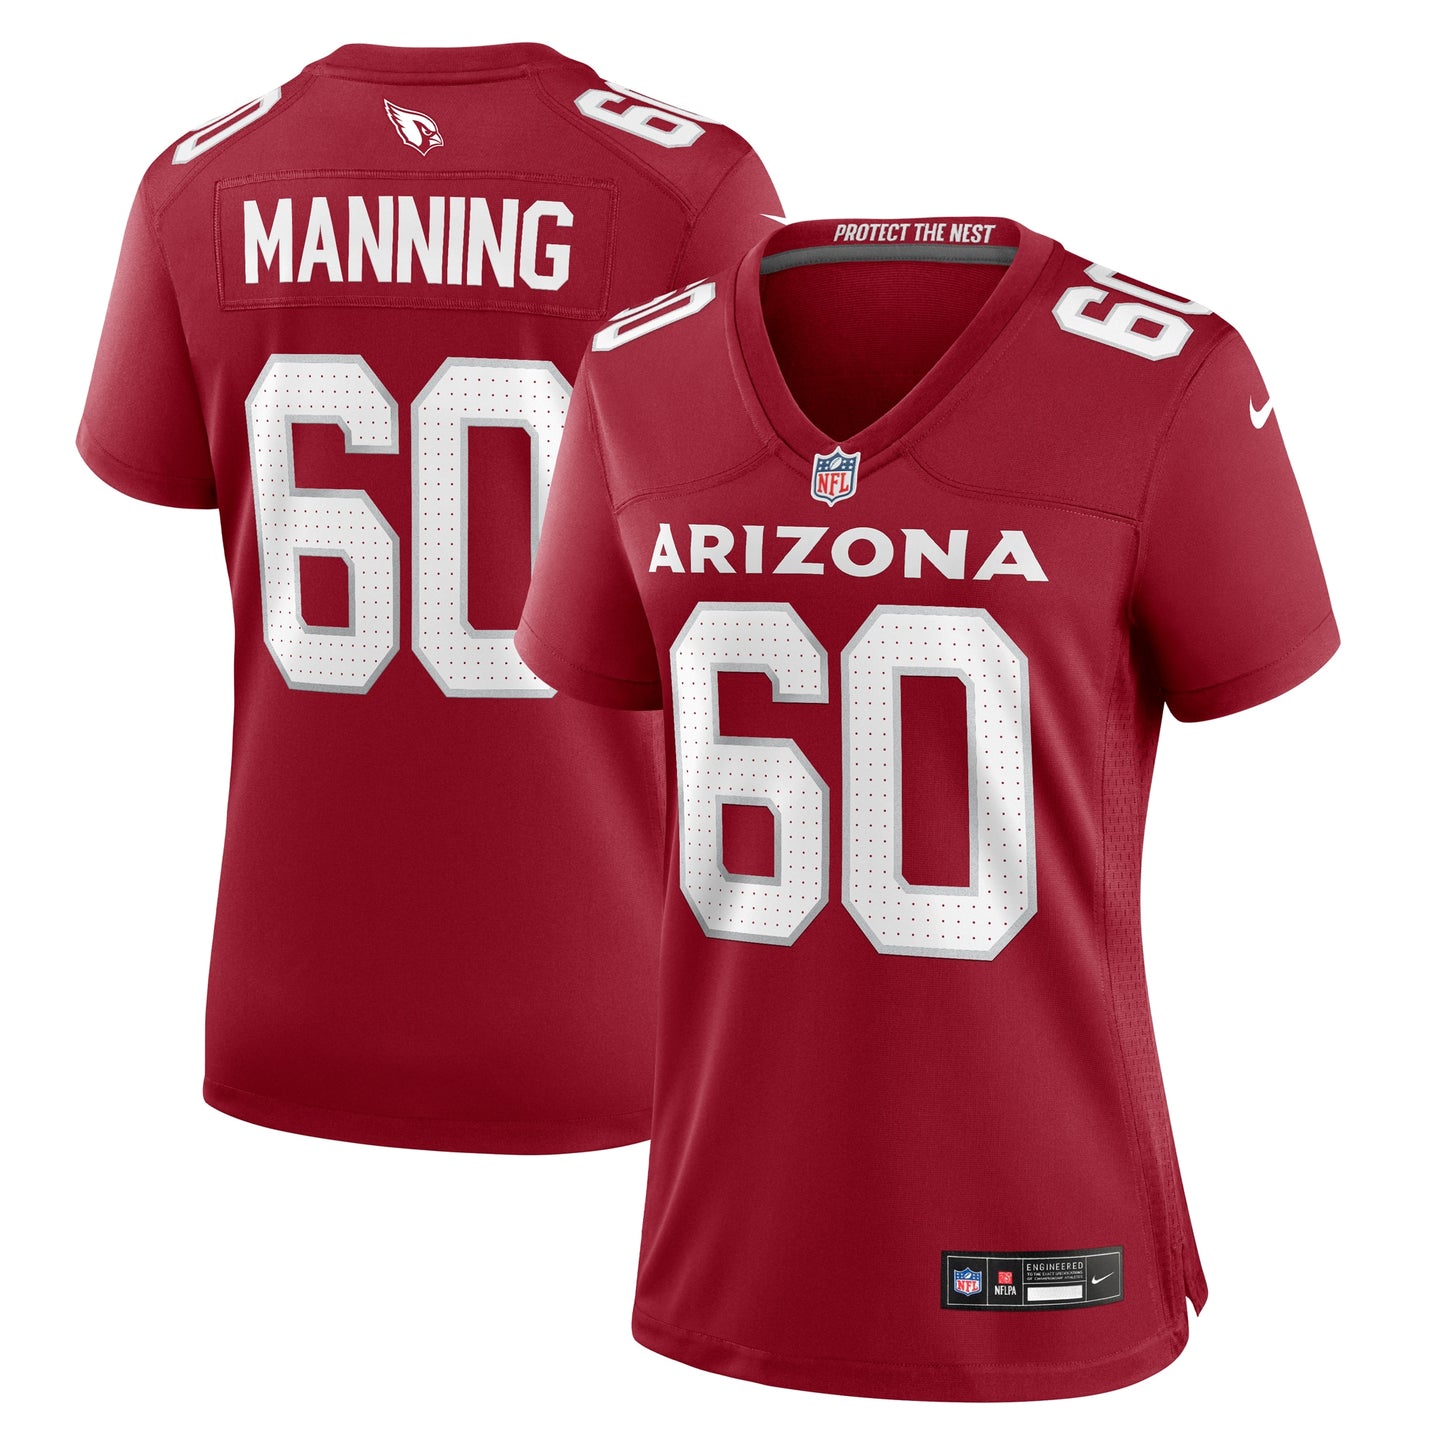 Ilm Manning Arizona Cardinals Nike Women's Team Game Jersey -  Cardinal